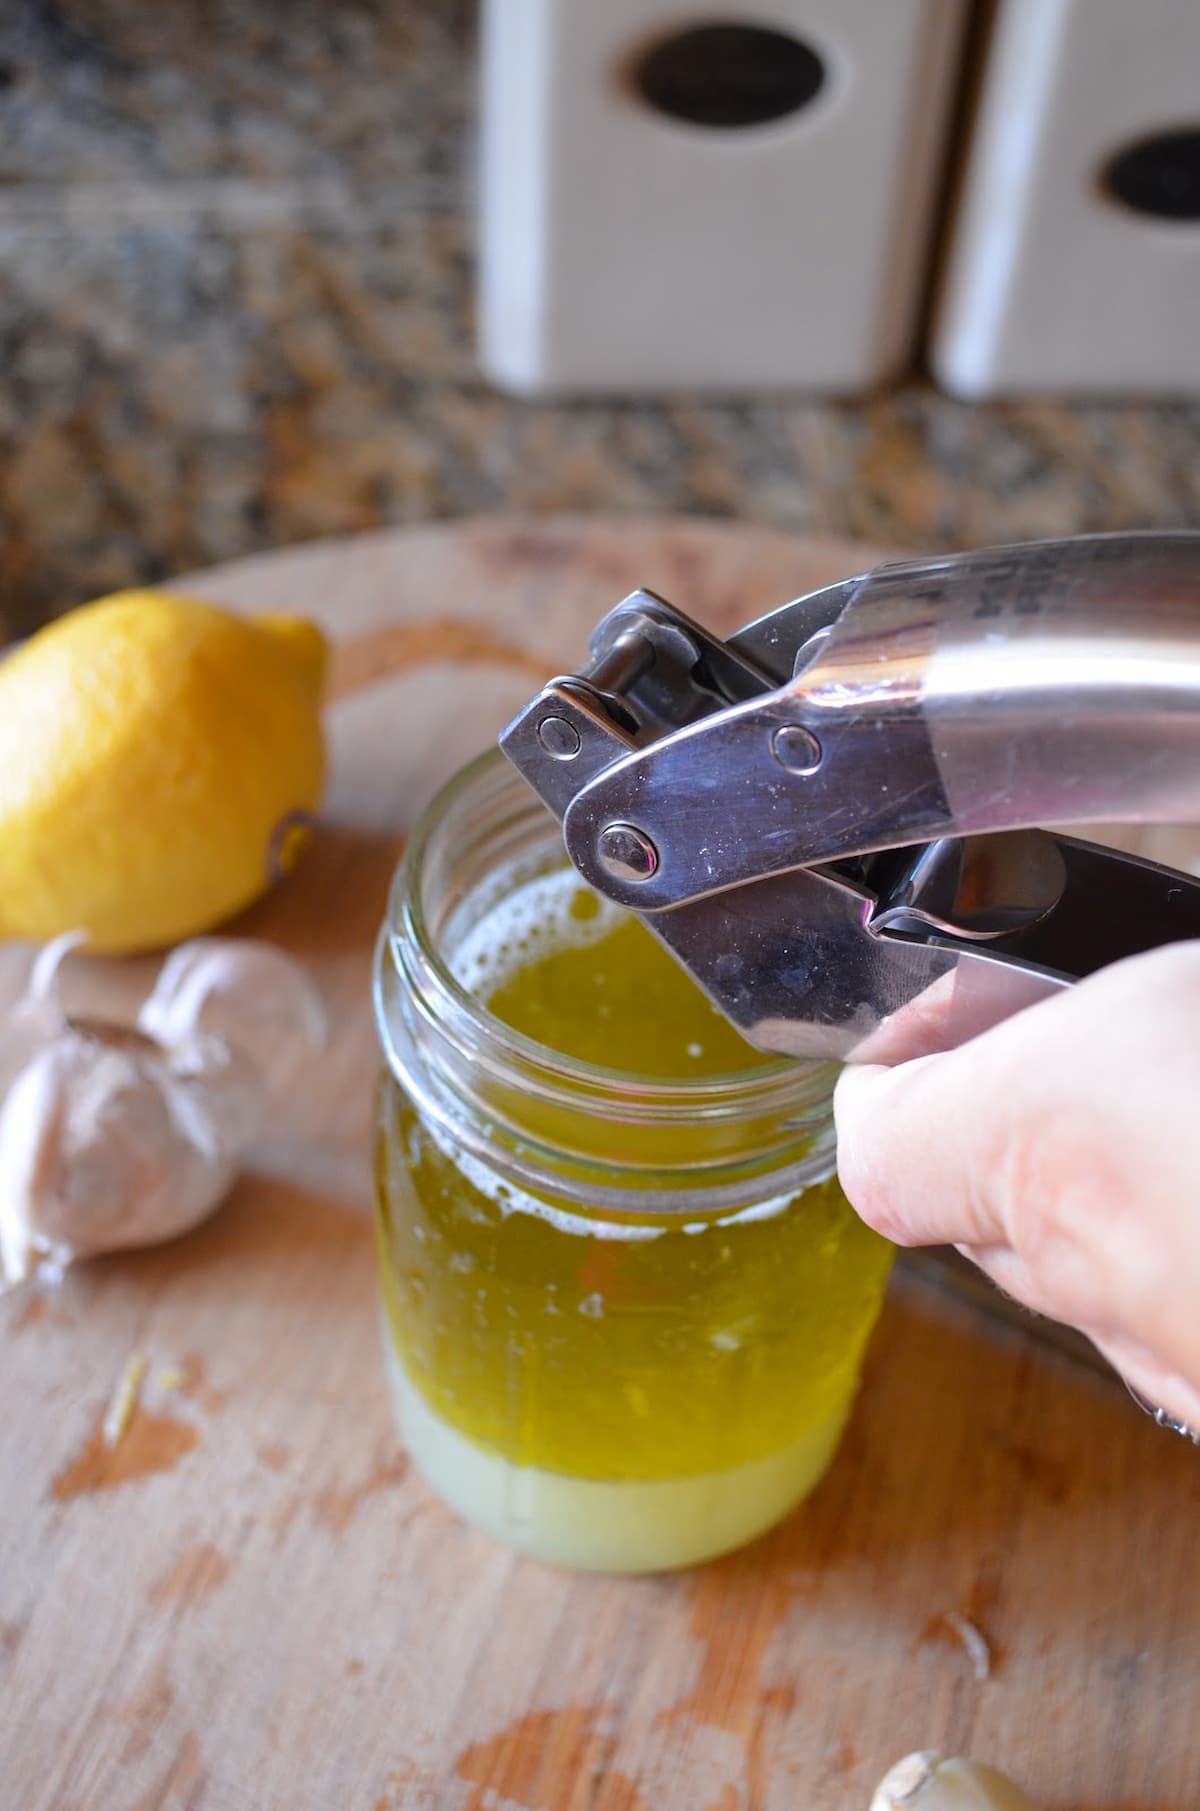 Garlic being pressed into Lemon Vinaigrette.